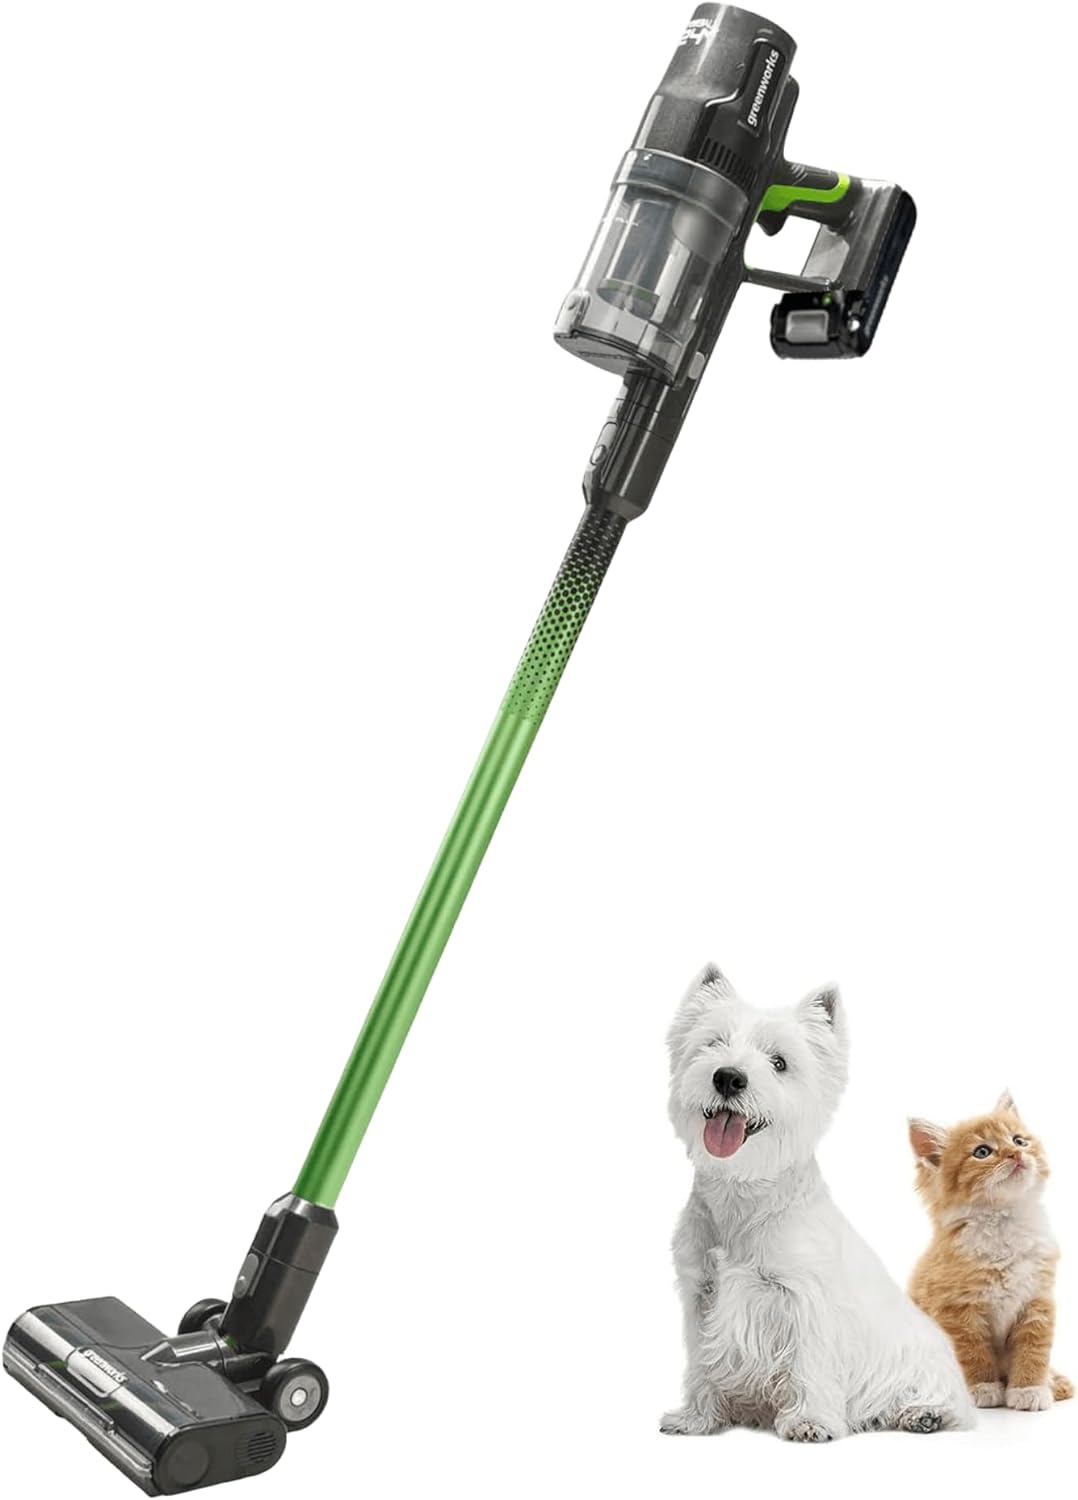 Greenworks 24V Brushless Cordless Stick Vacuum; Green Only $150.99